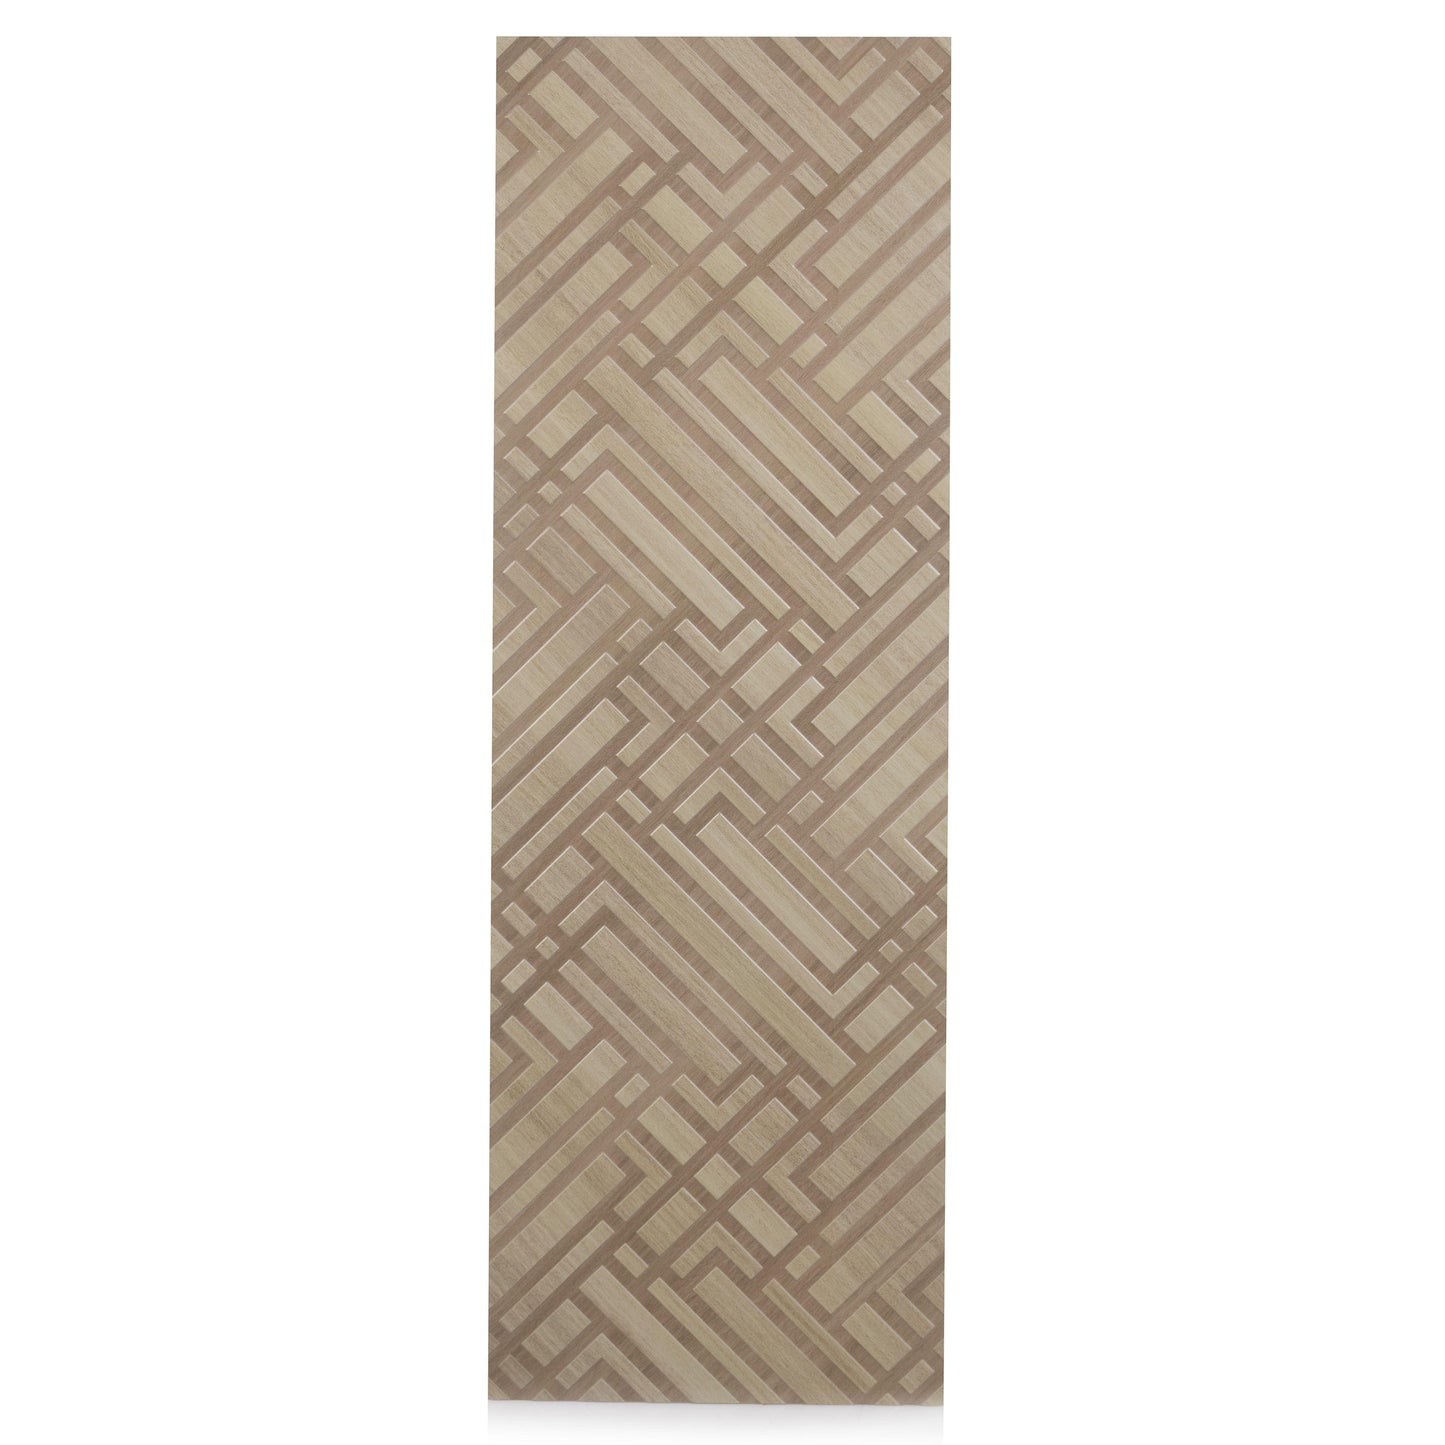 16x48 Wonderful Cross Designer Wood Look Crema wall tile - Industry Tile